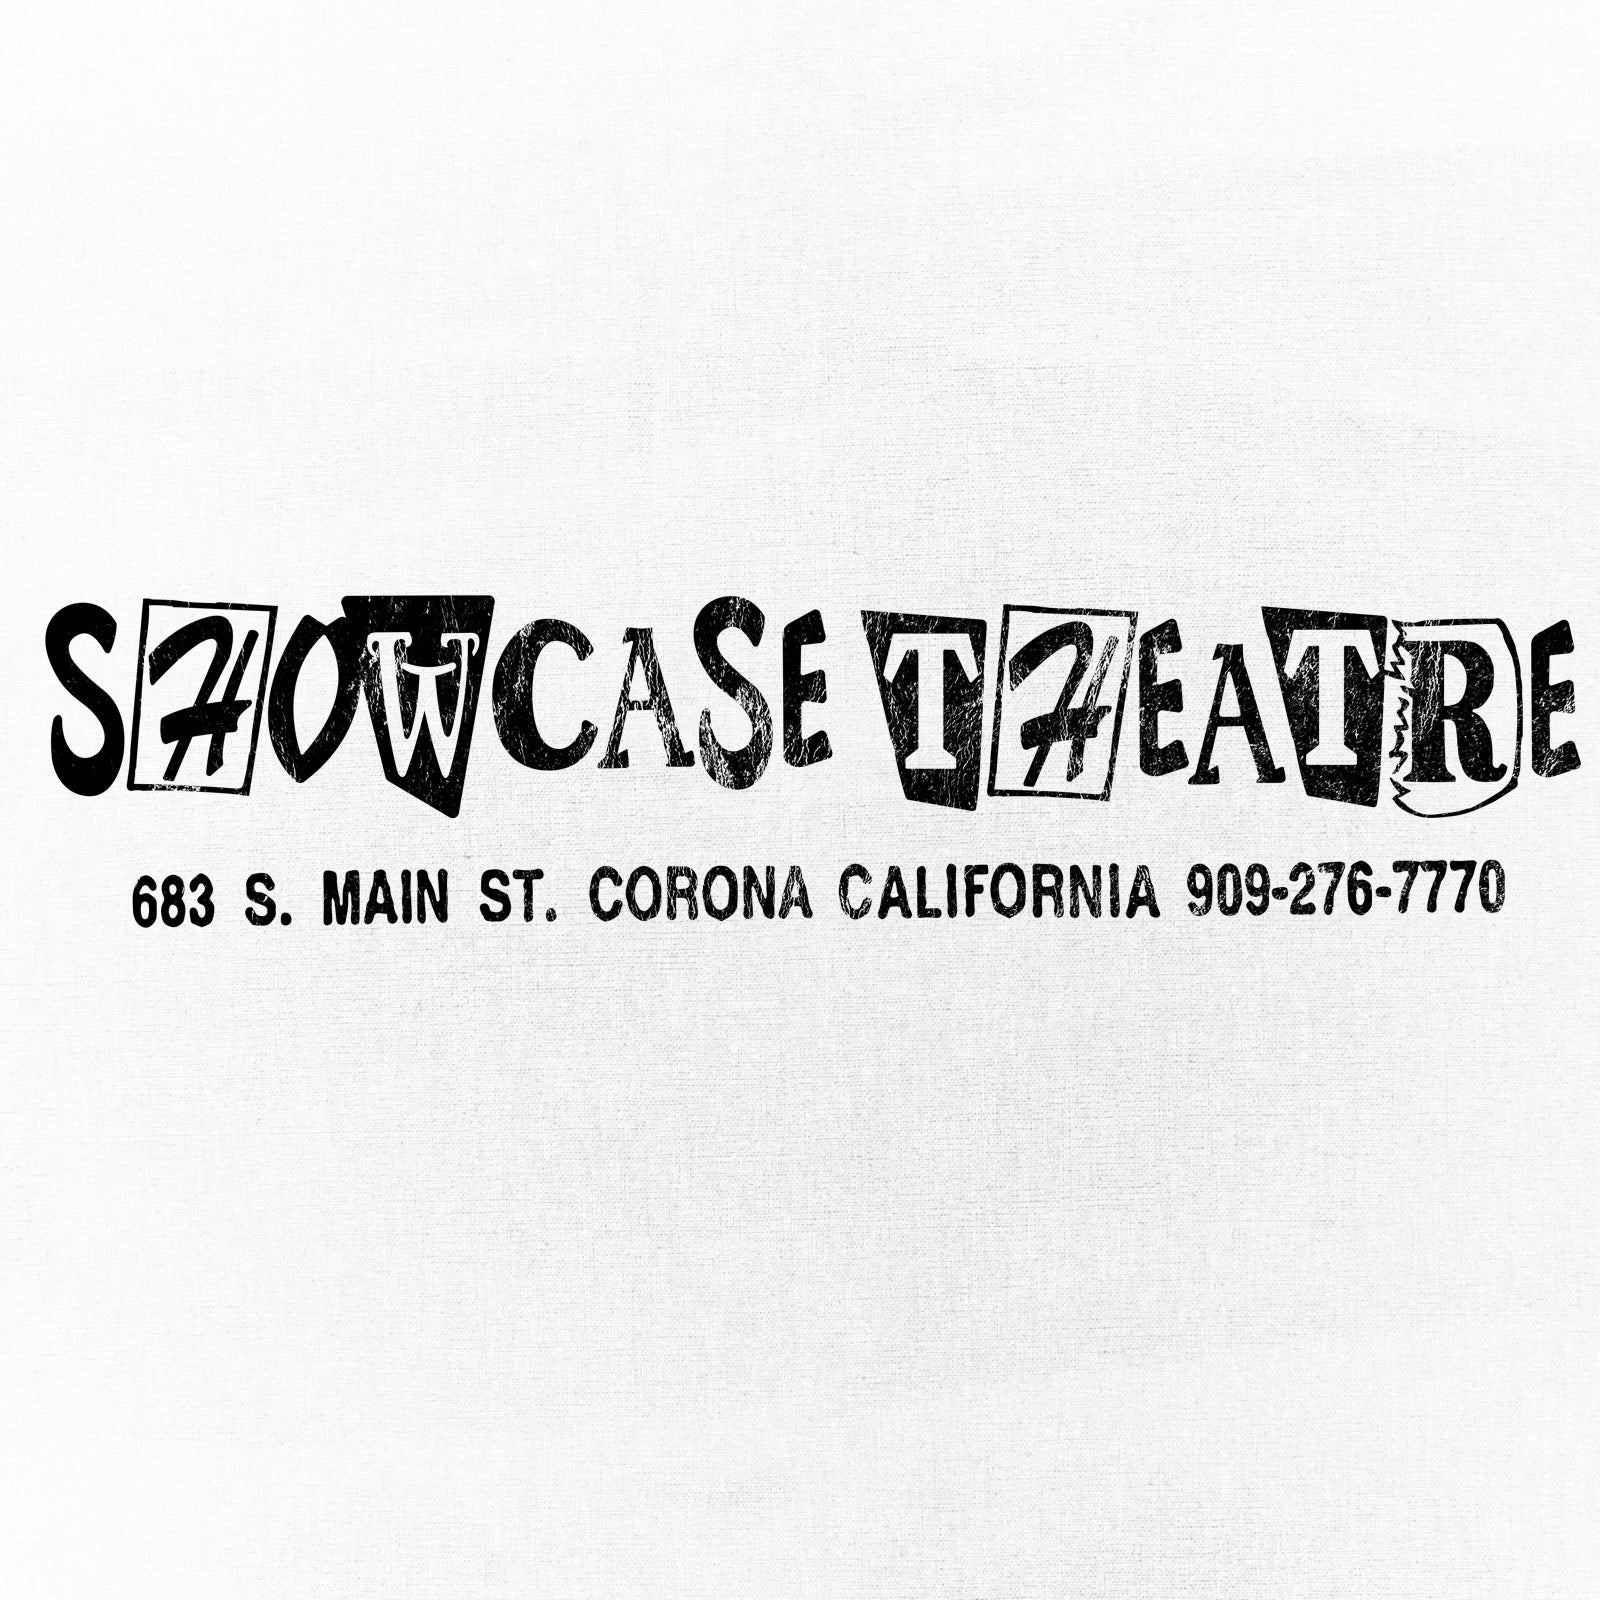 Showcase Theatre T-Shirt